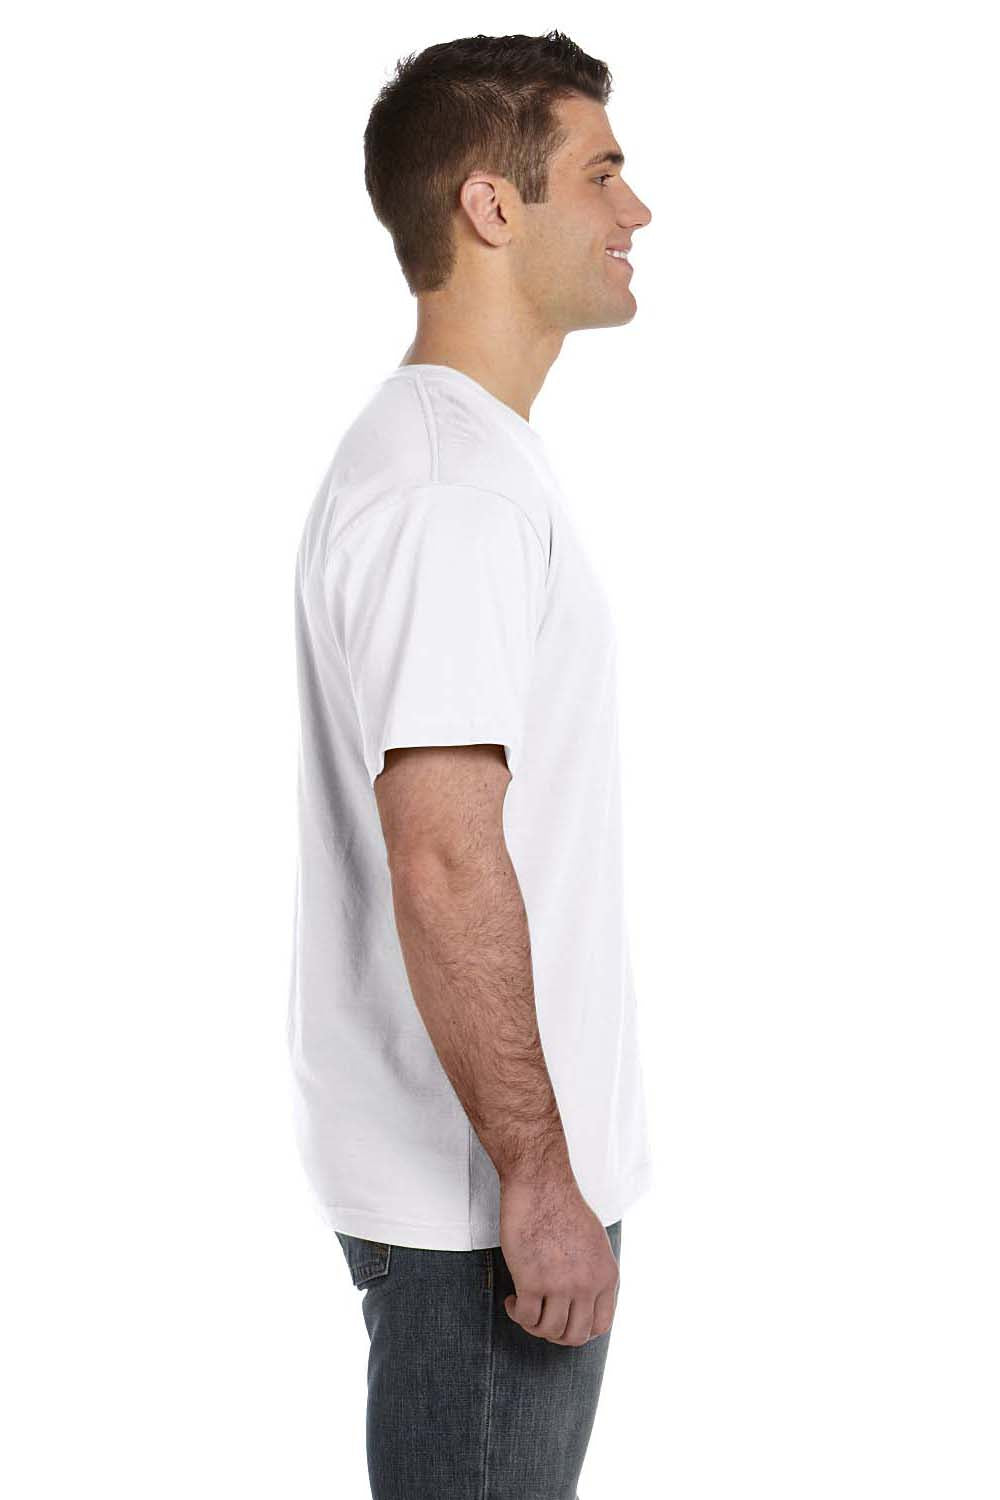 LAT 6901 Mens Fine Jersey Short Sleeve Crewneck T-Shirt White Side